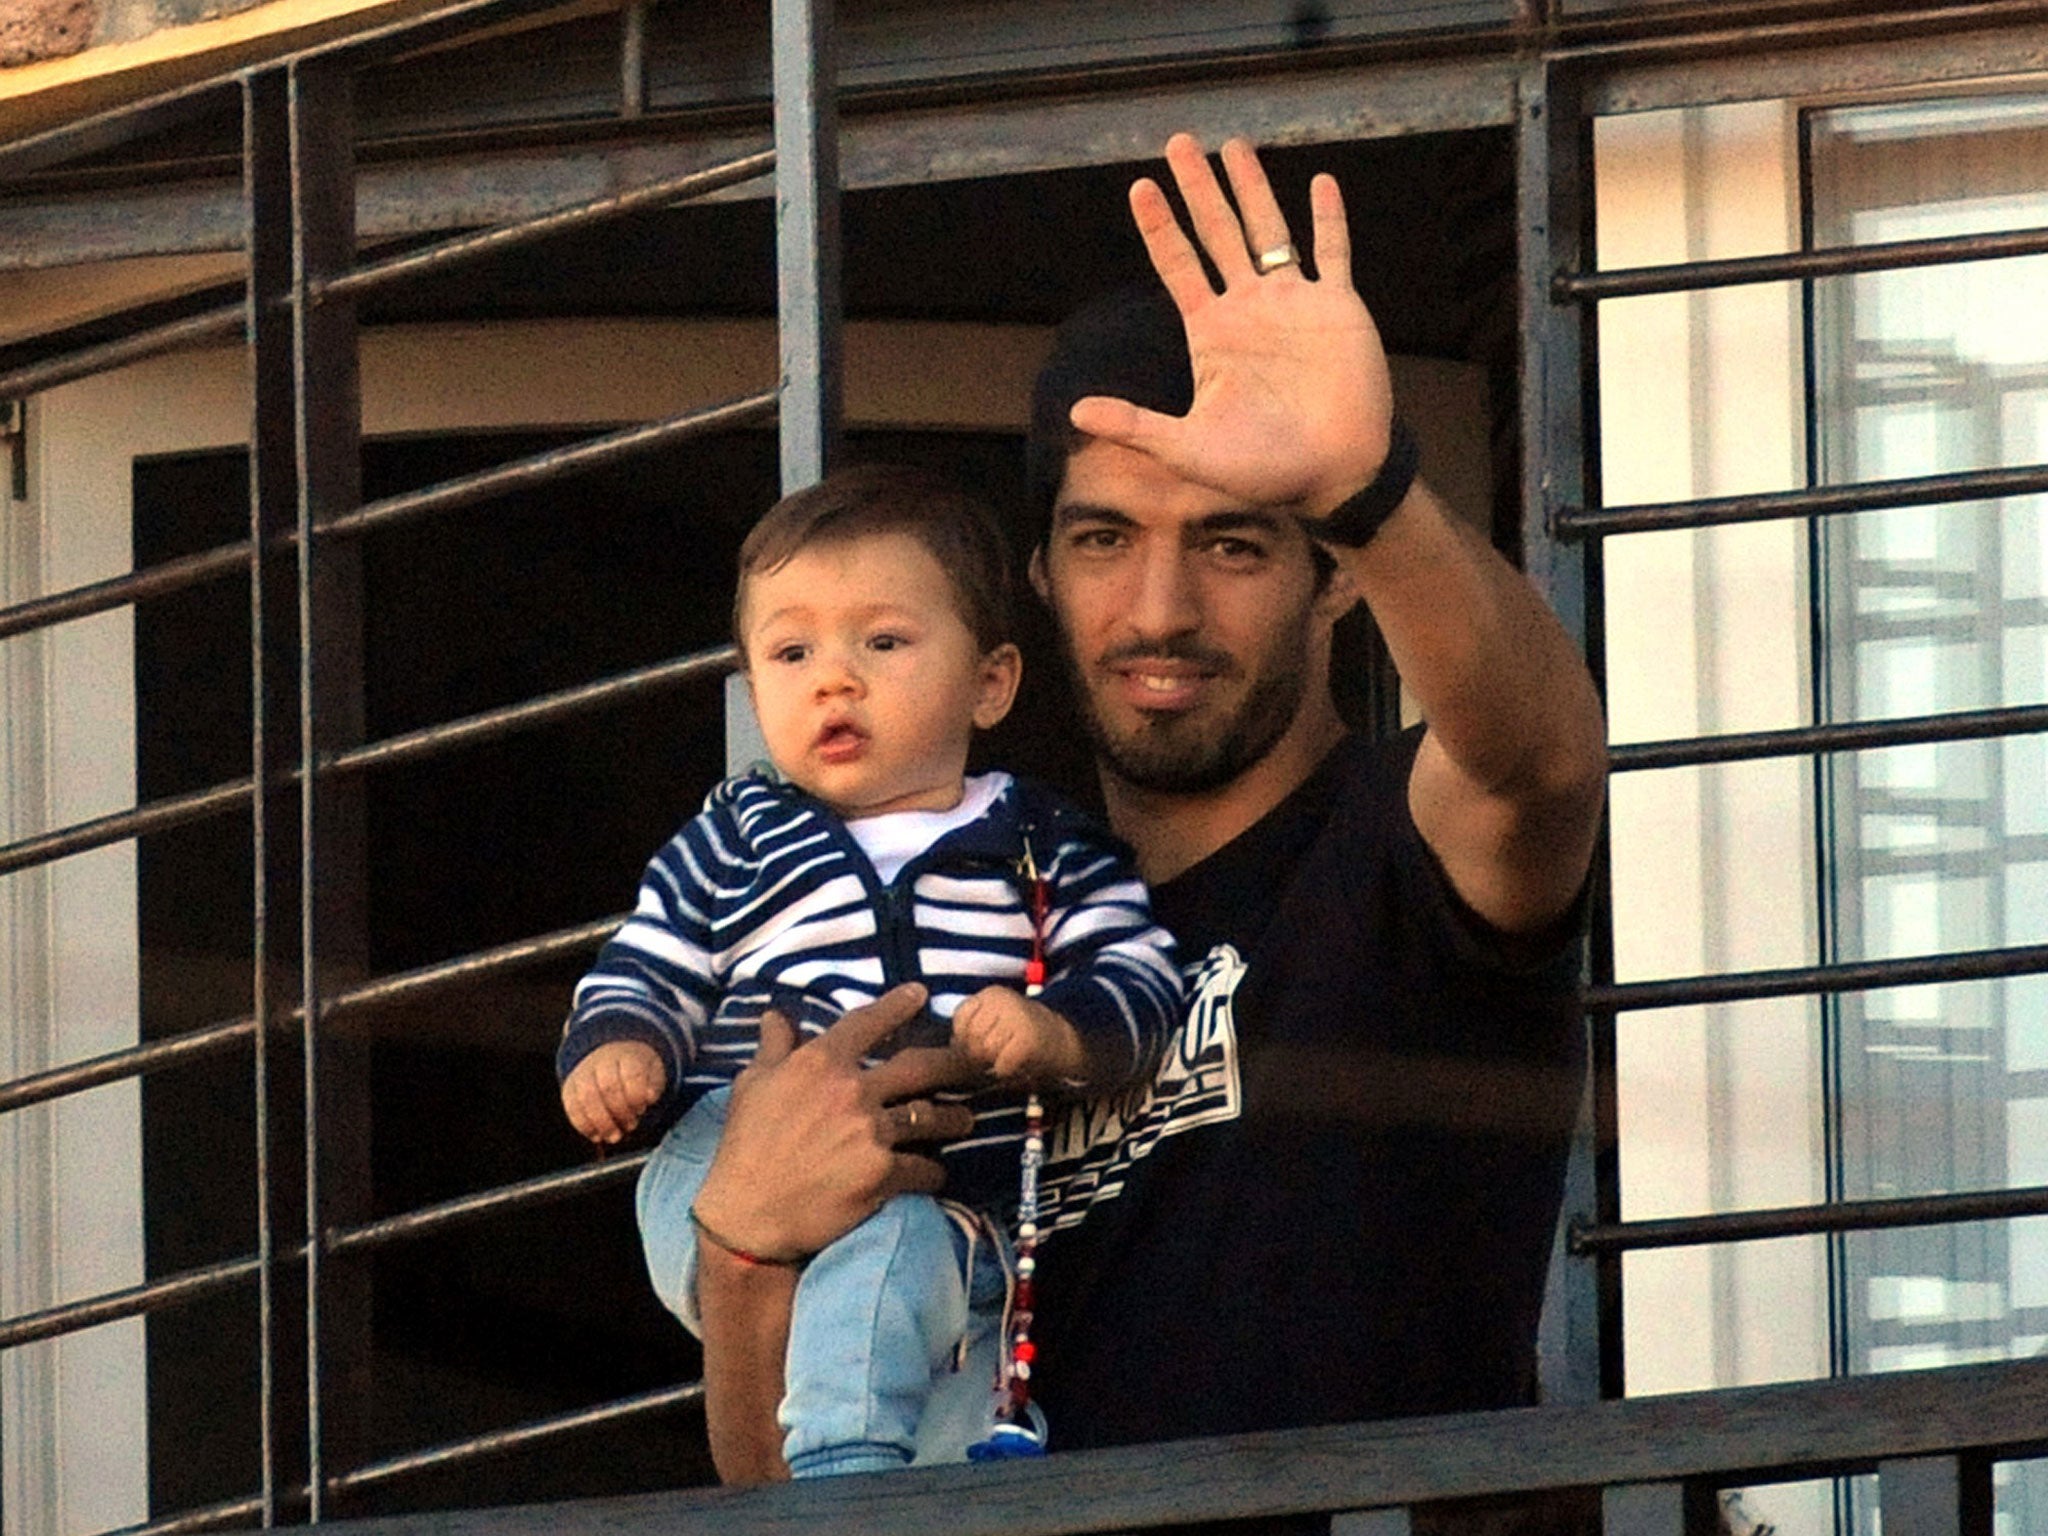 Homecoming: Thousands greet Luis Suarez on return to Uruguay's